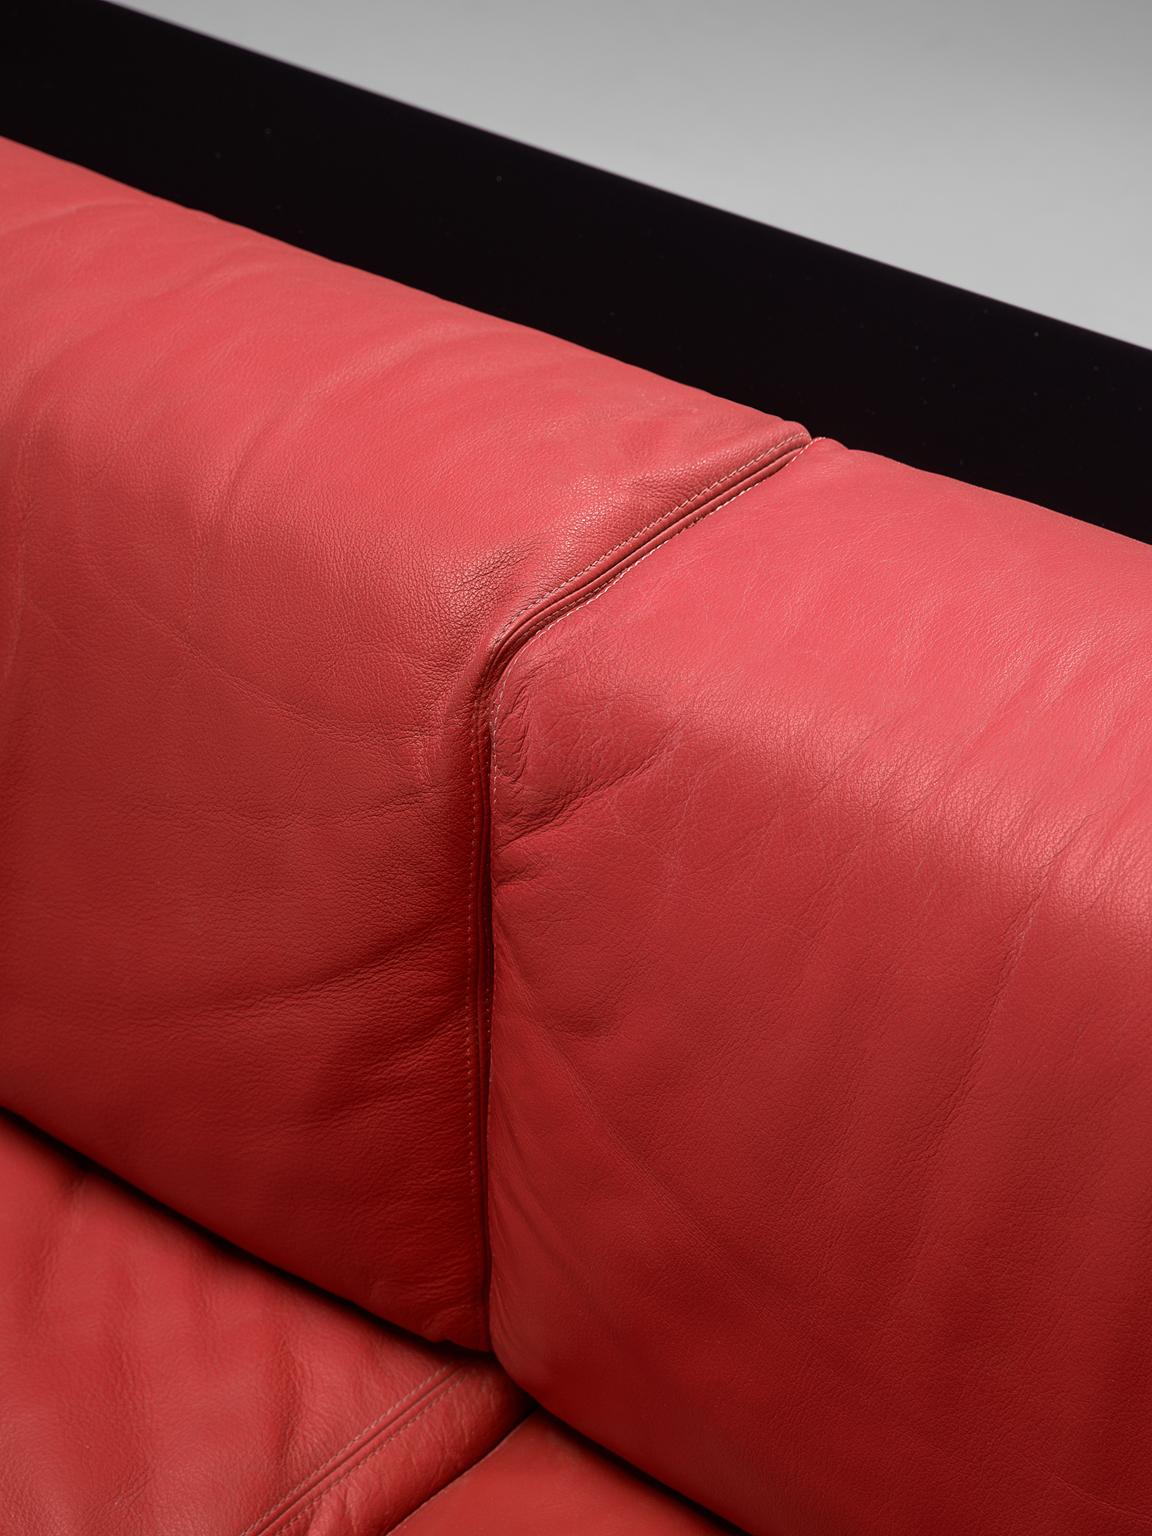 Mid-20th Century Massimo Vignelli Black and Red 'Saratoga' Living Room Set